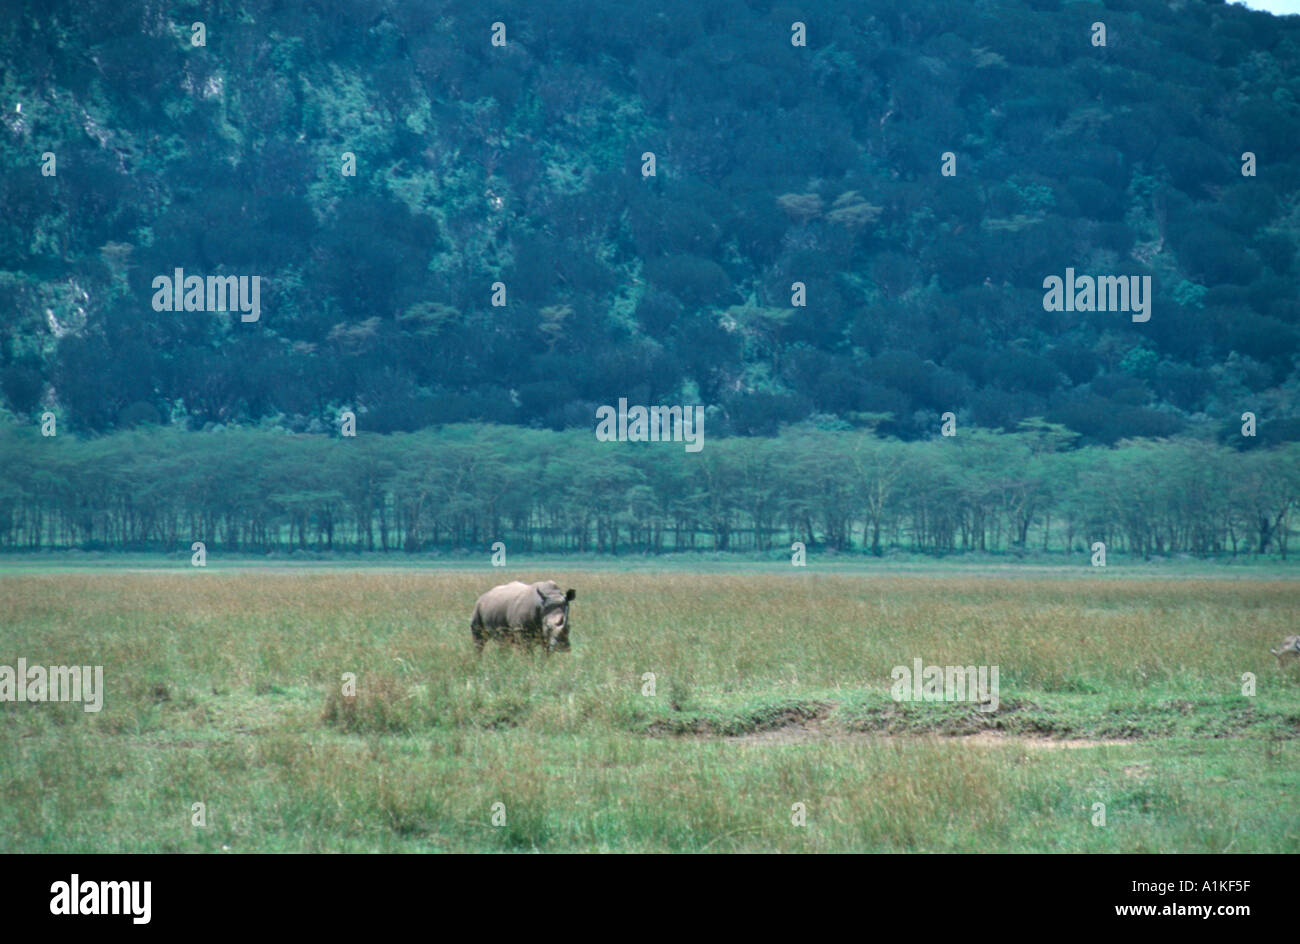 Wild rhinocerous in Africa Stock Photo